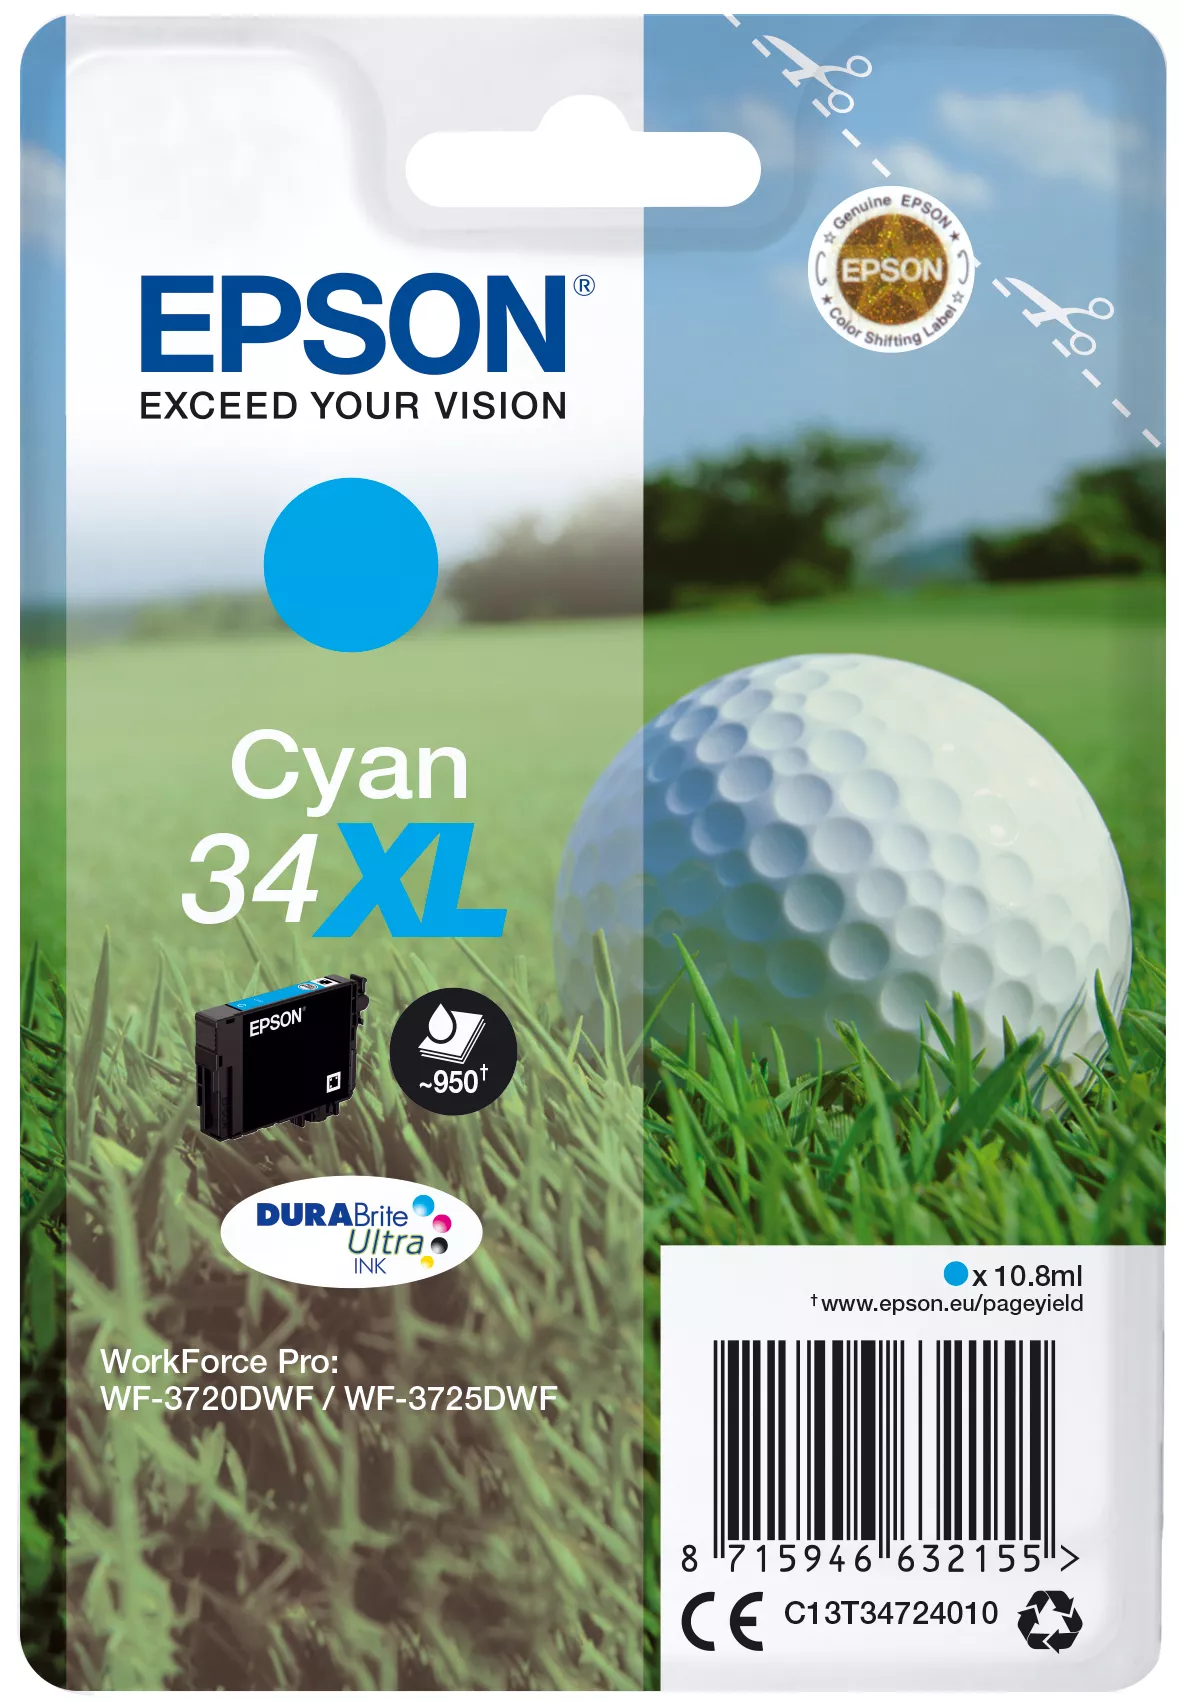 Vente EPSON Singlepack 34XL Encre Cyan DURABrite Ultra 10,8ml au meilleur prix